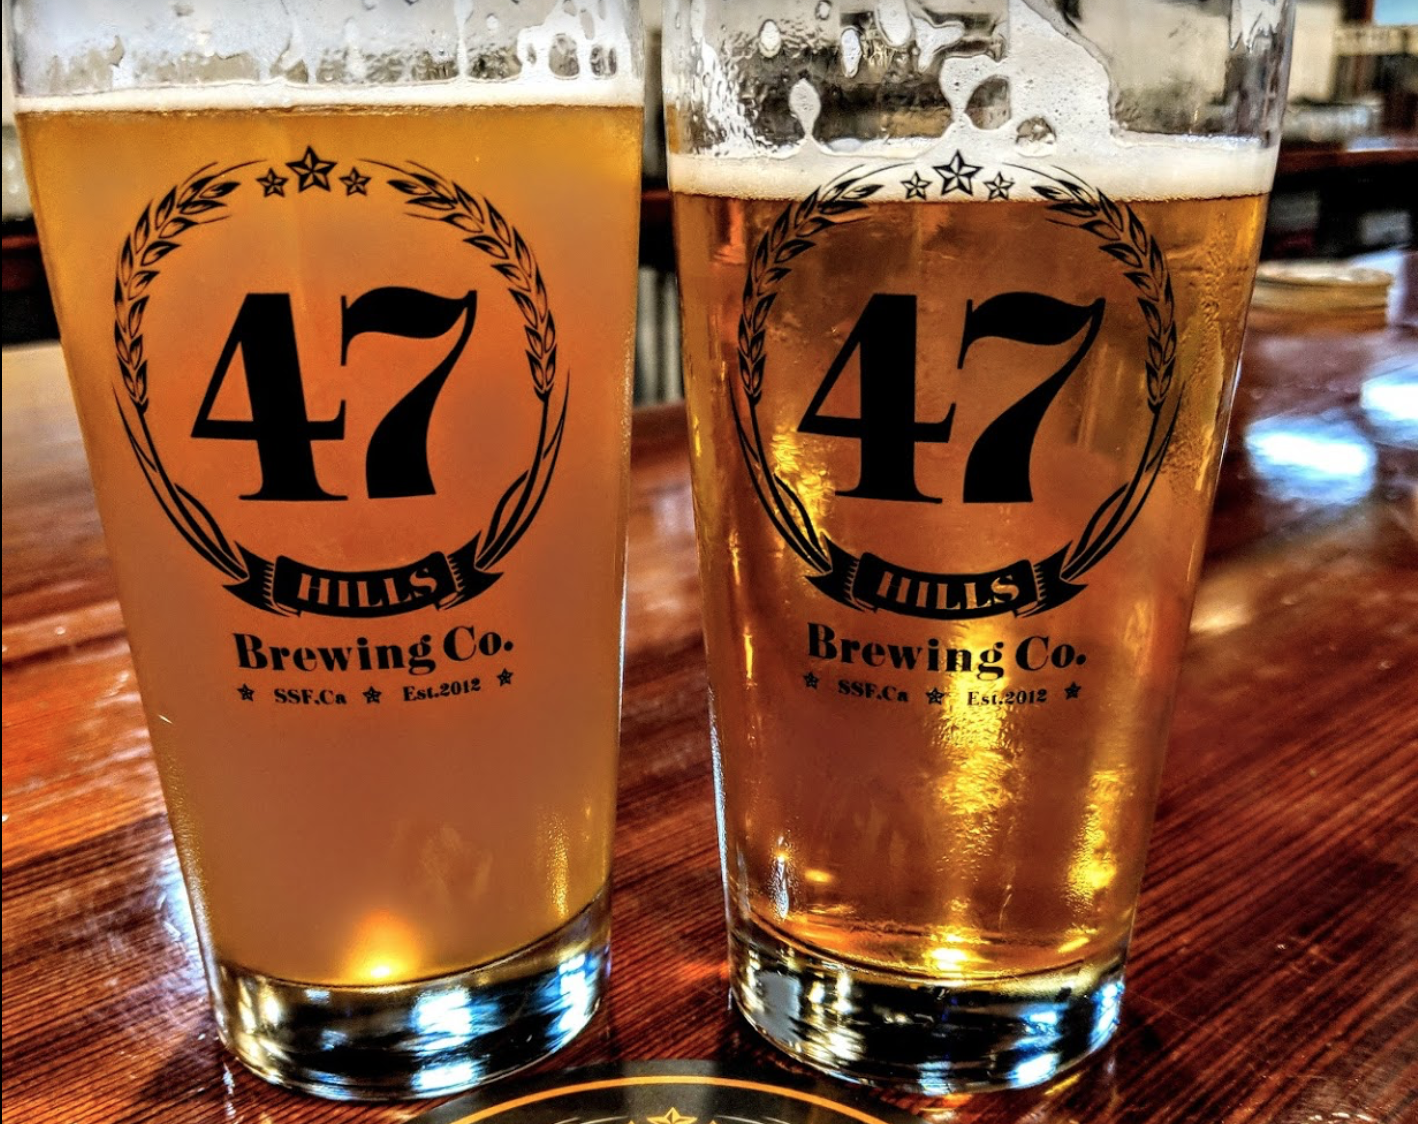 47 Hills Brewing Company